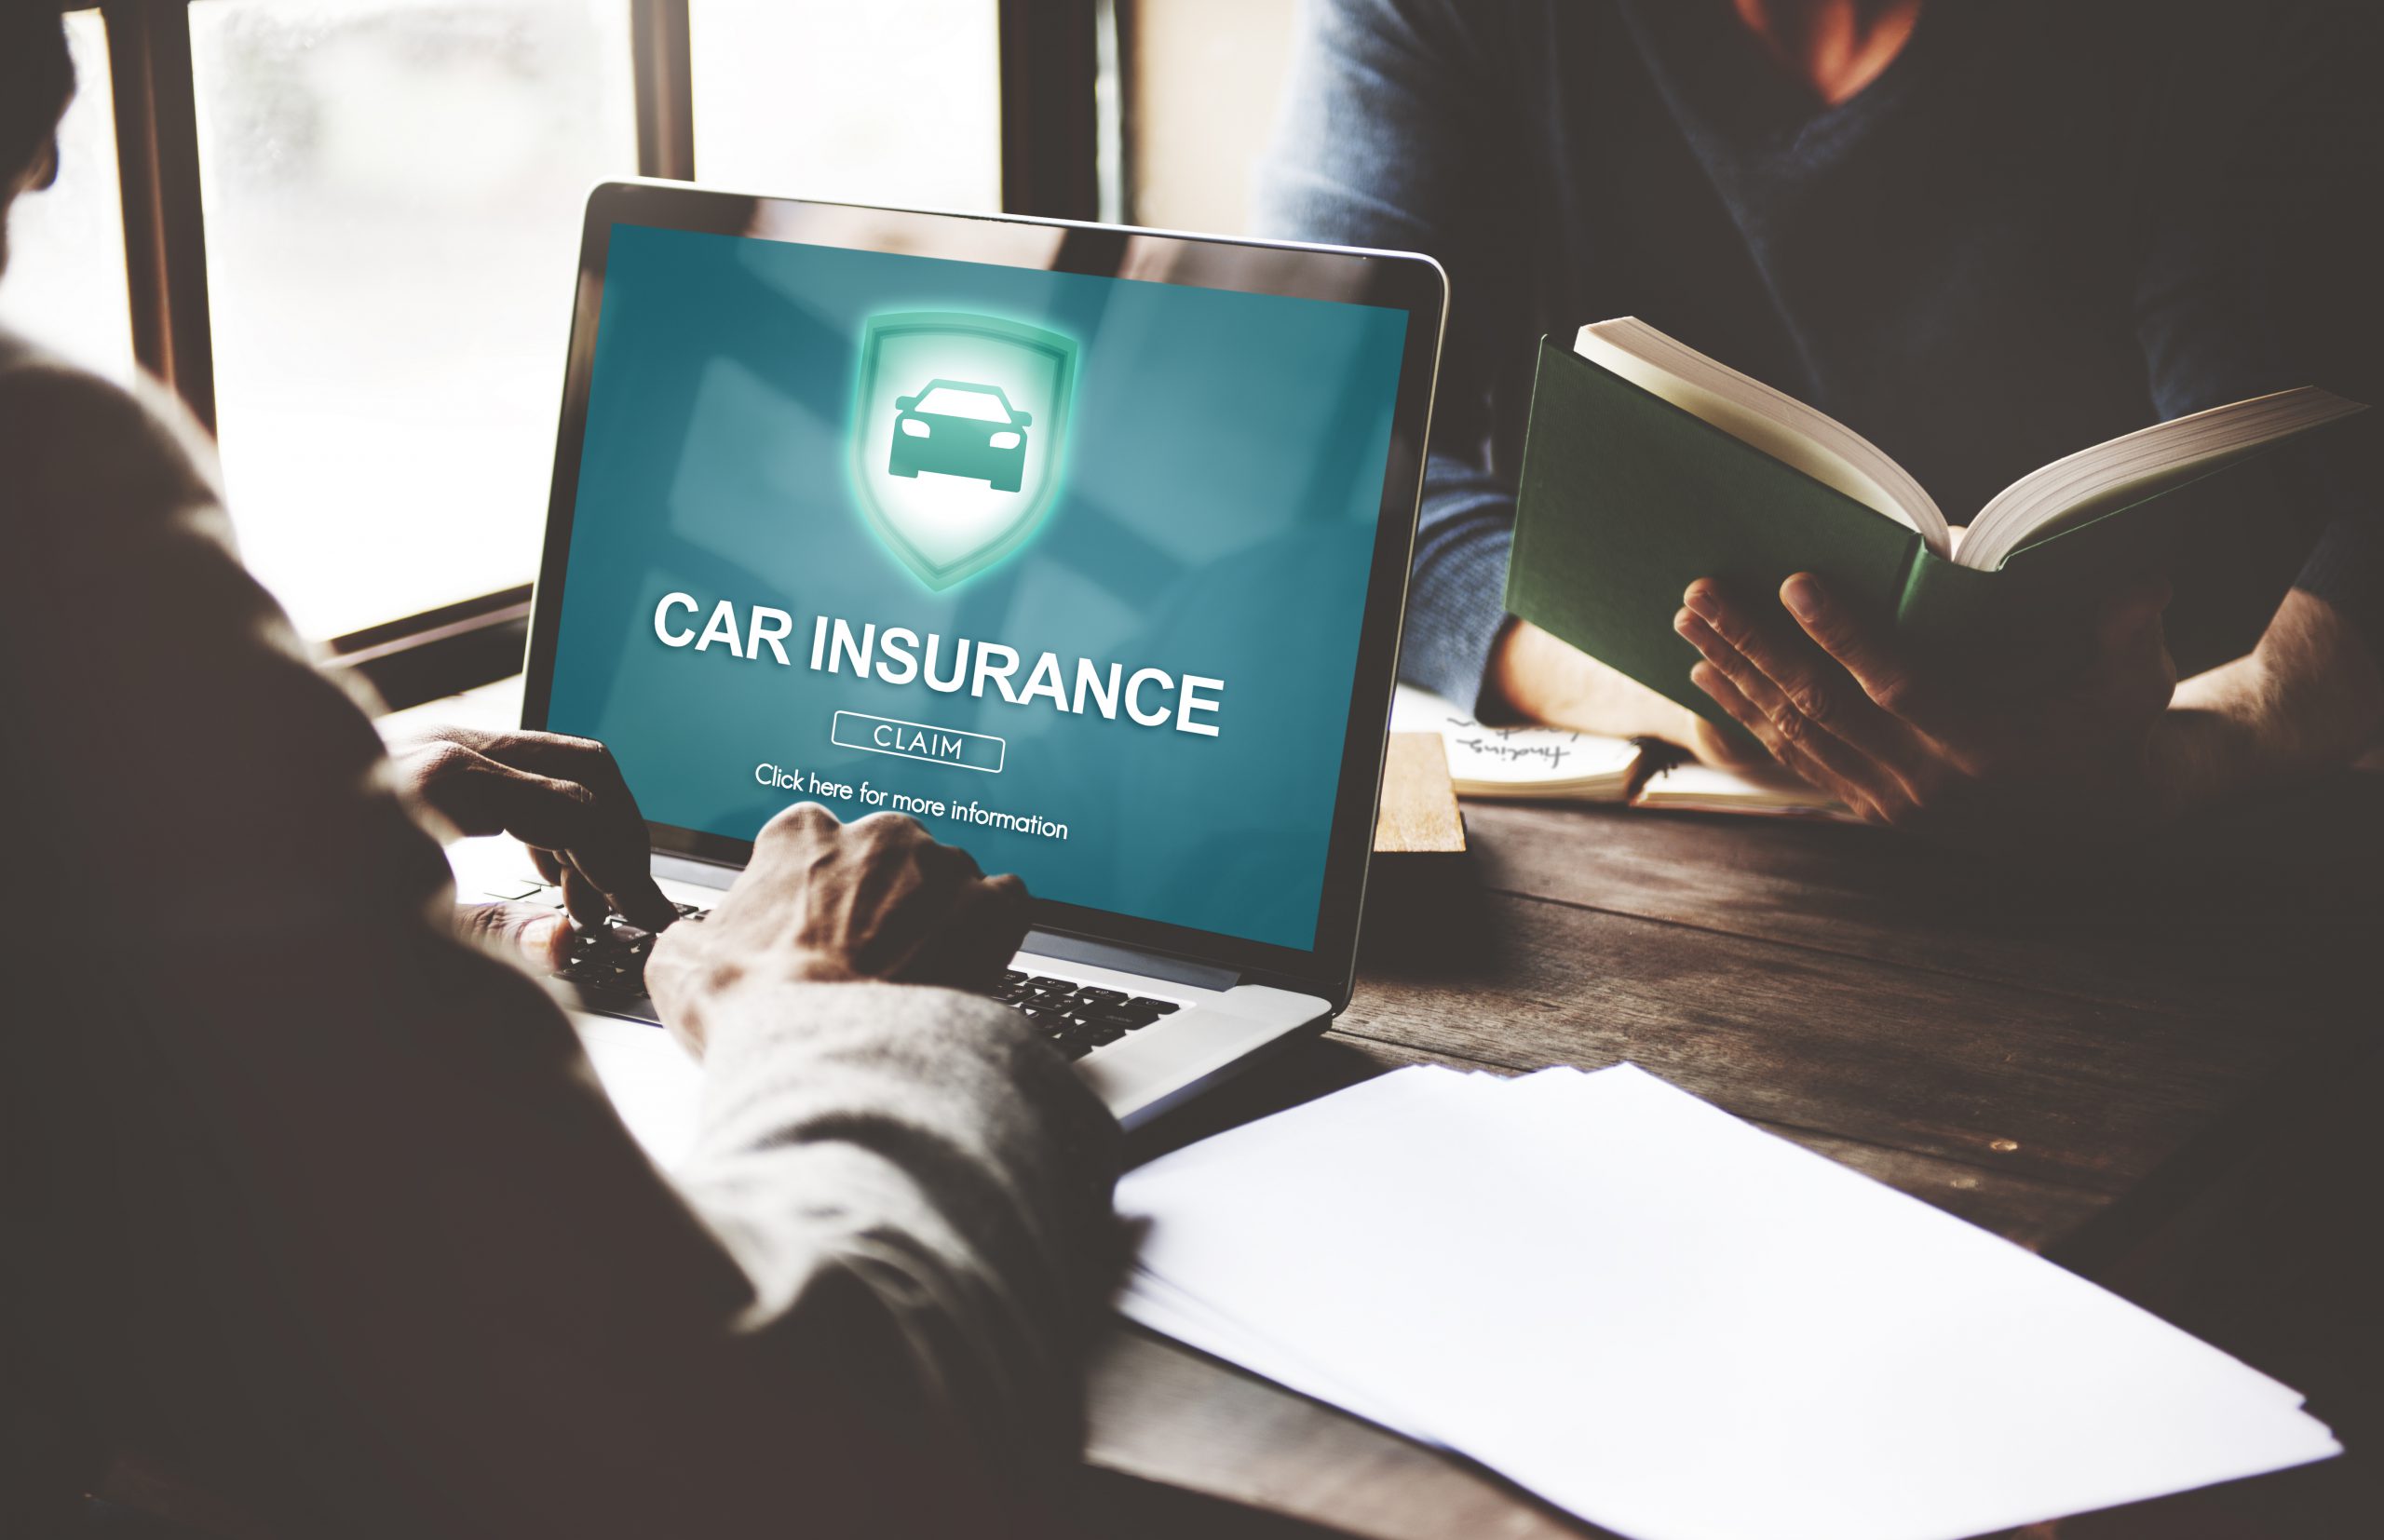 usage based car insurance in Singapore